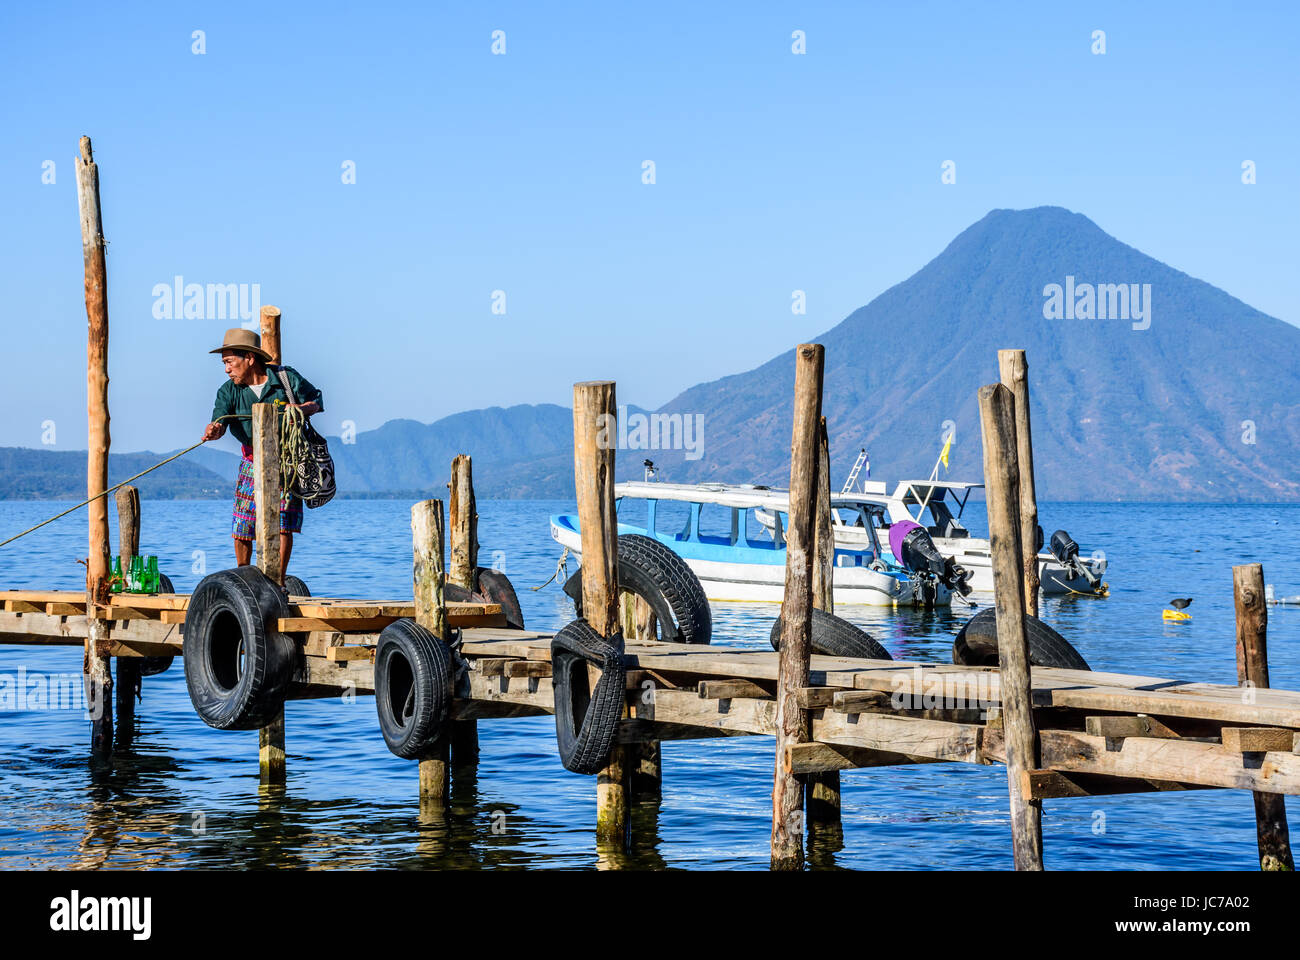 Lake Atitlan, Guatemala - April 4, 2016: Local man dressed in traditional Mayan pants pulls in boat with San Pedro volcano behind. Stock Photo